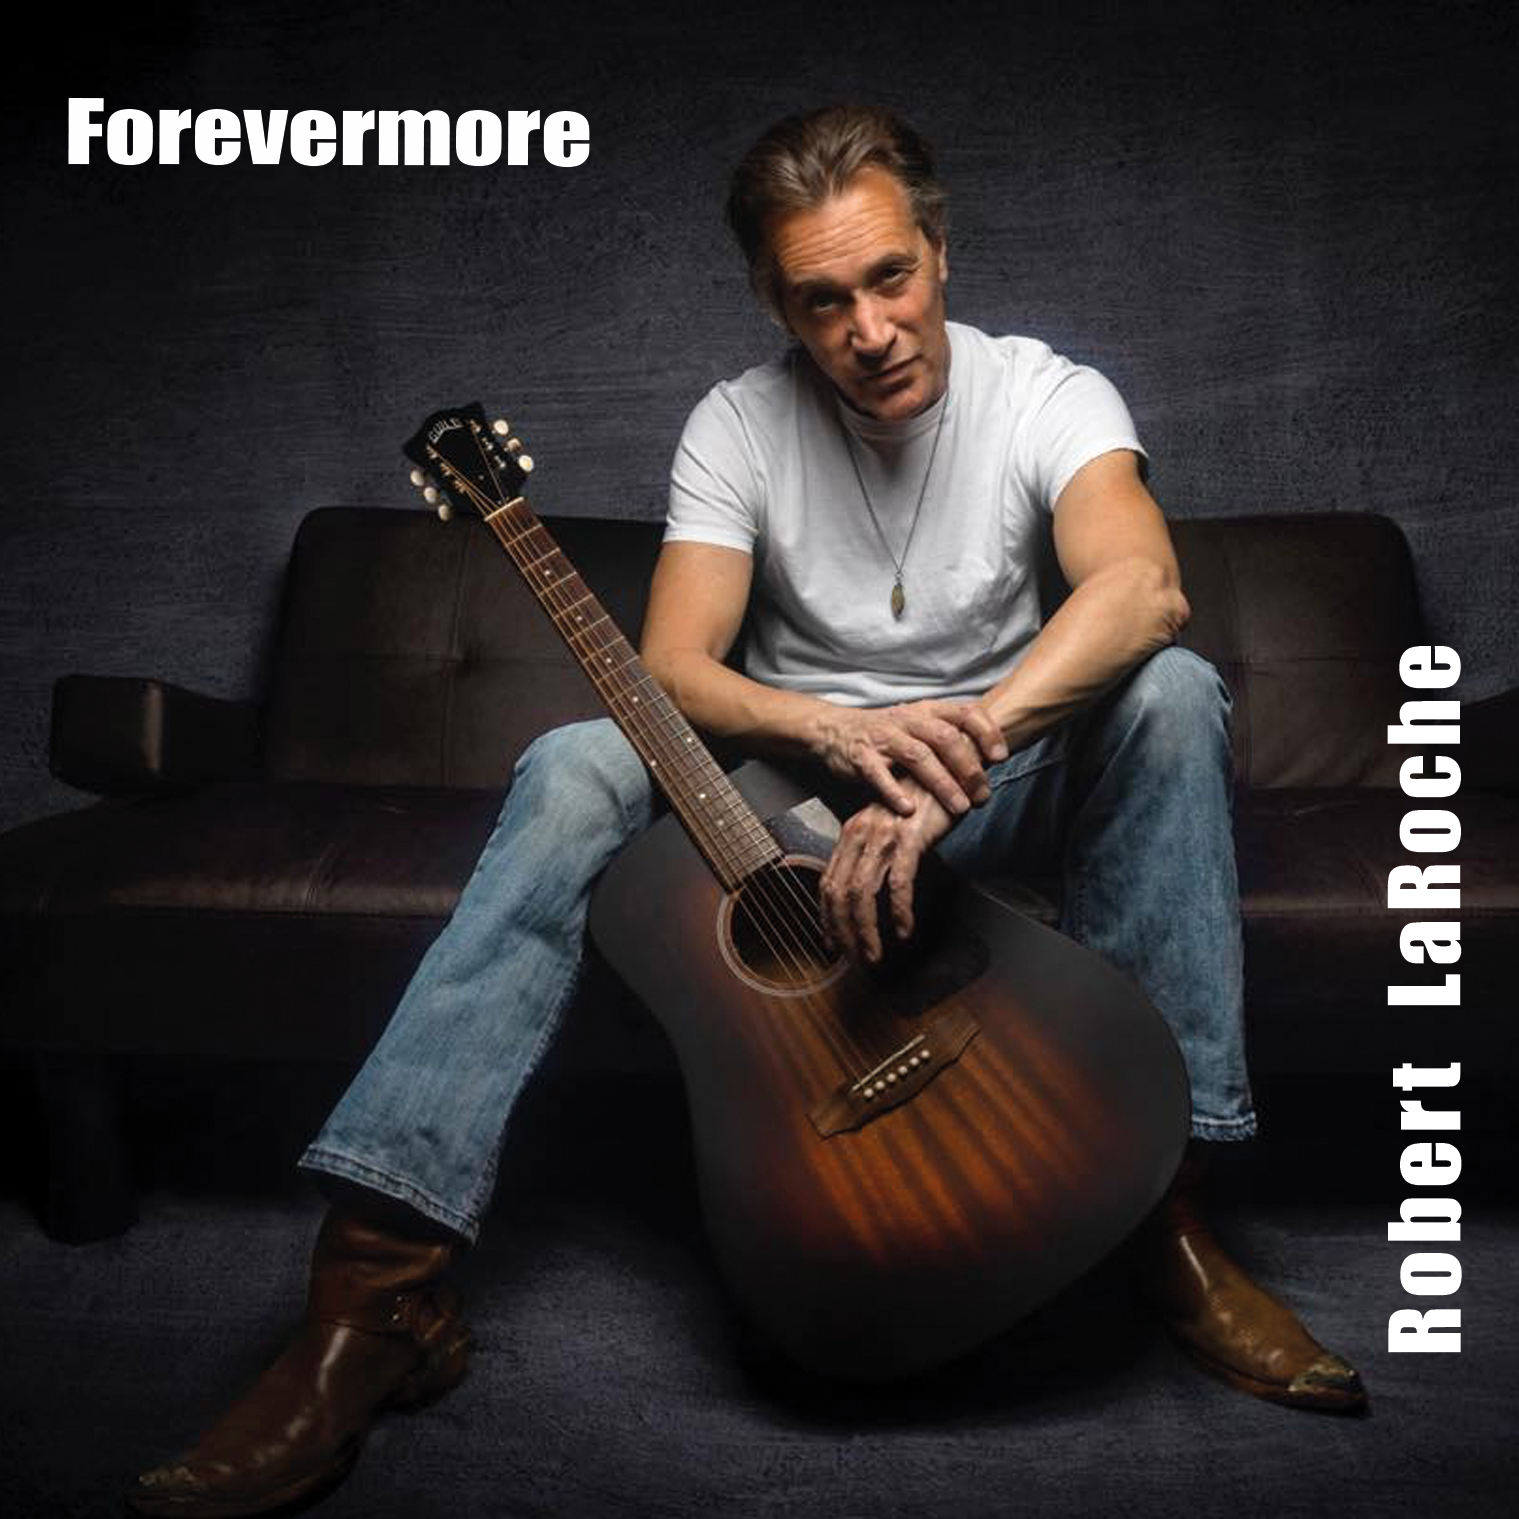  Escucha “Forevermore”, el nuevo álbum de Robert LaRoche